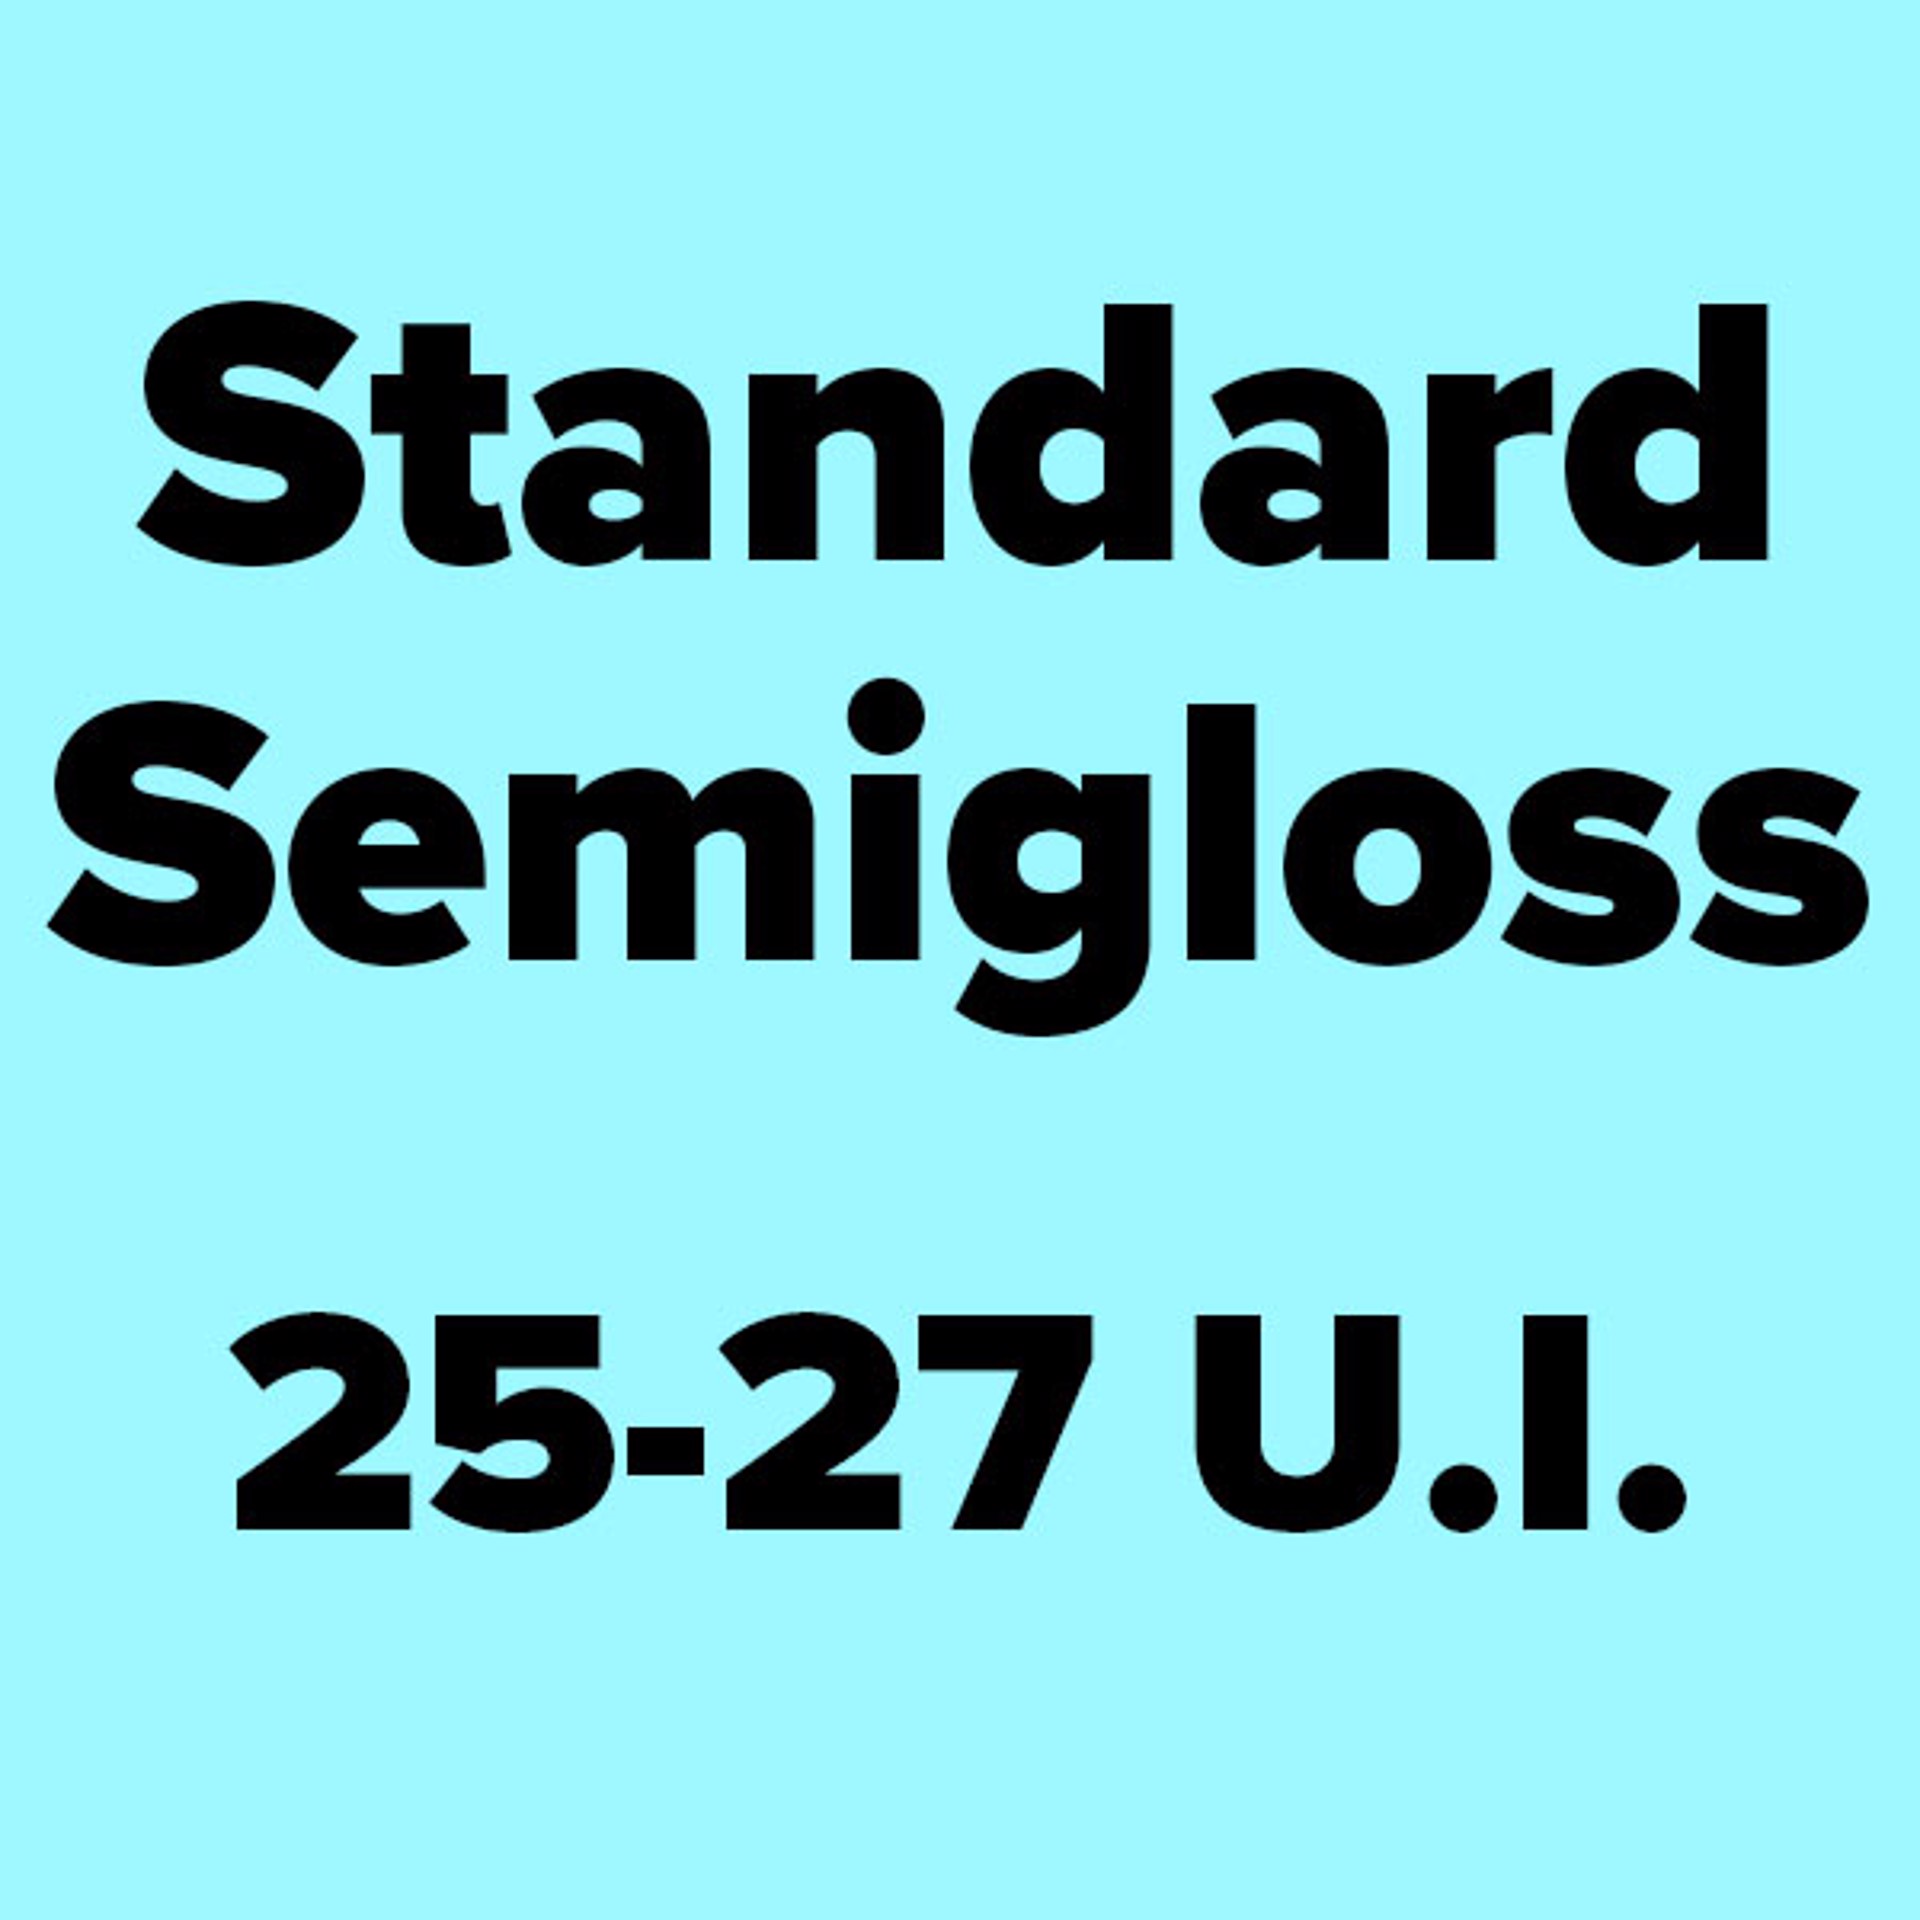 Standard Printing Semigloss 25-27 U.I. by LaFontsee Galleries Graphics